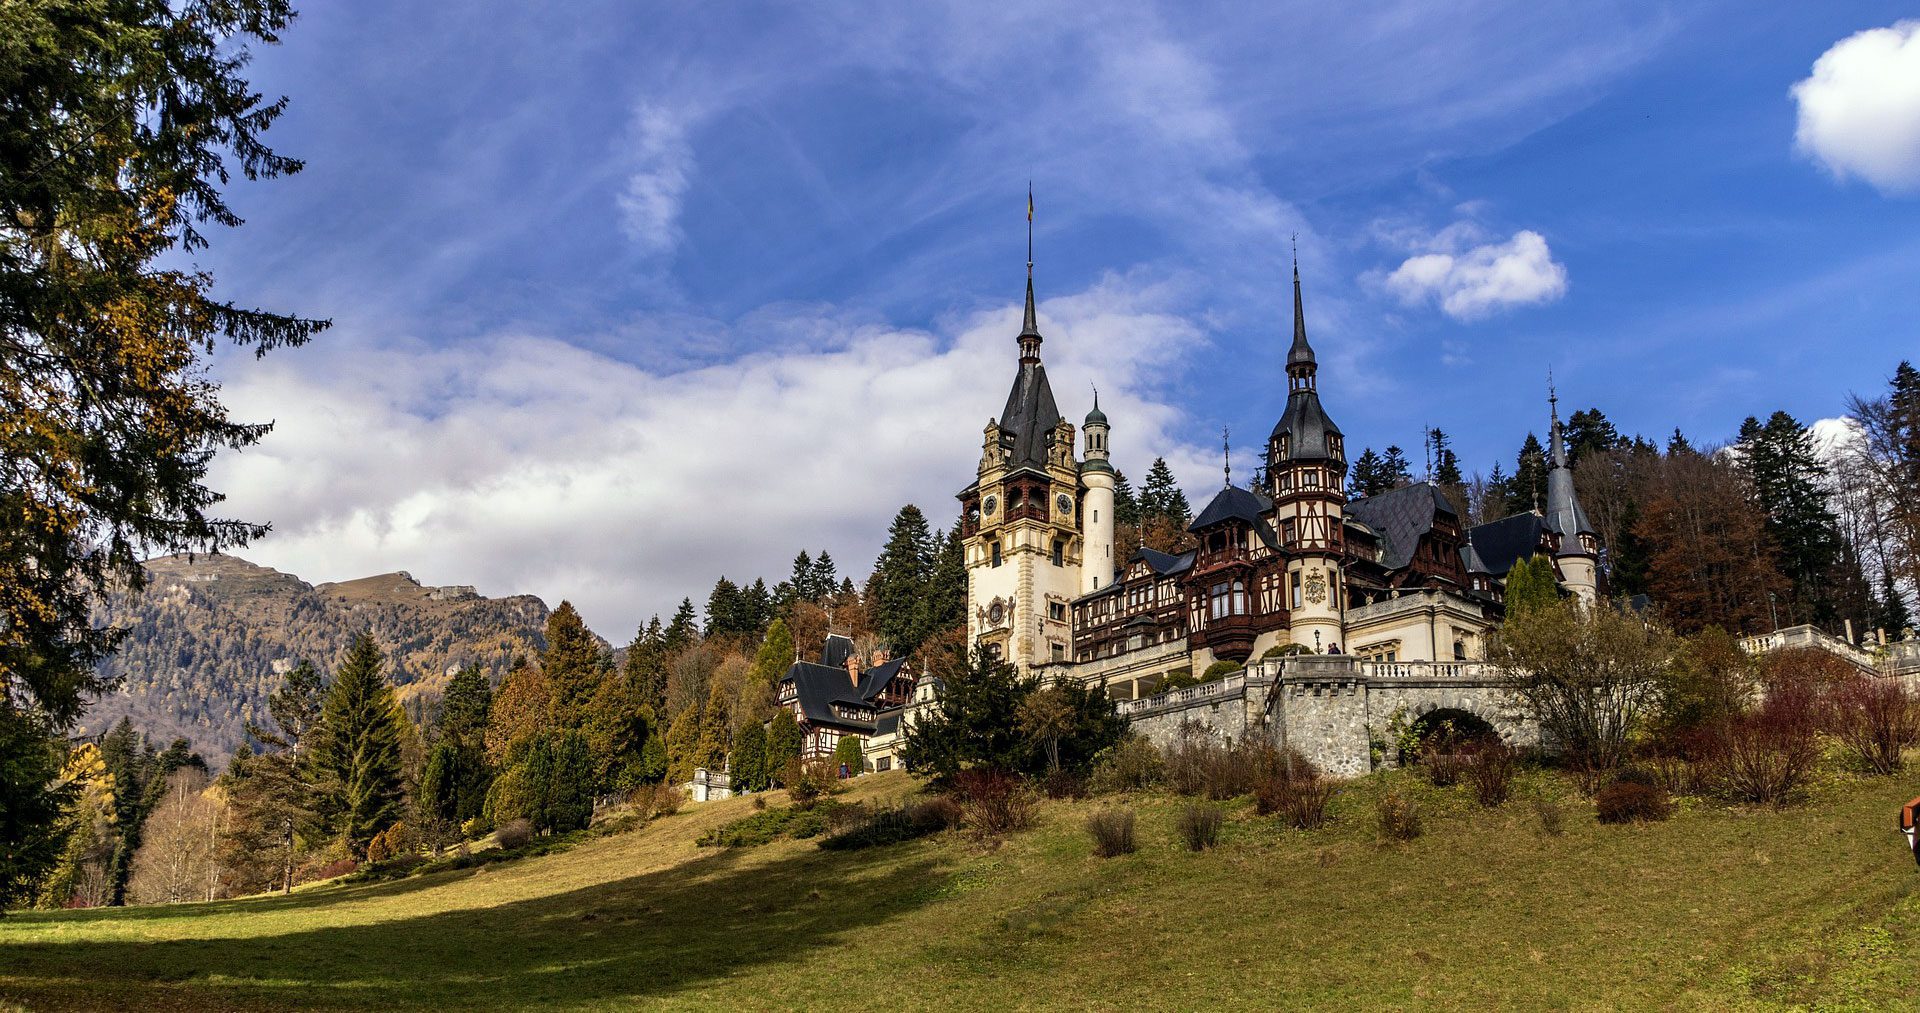 Peles Castle-Sinaia, Romania